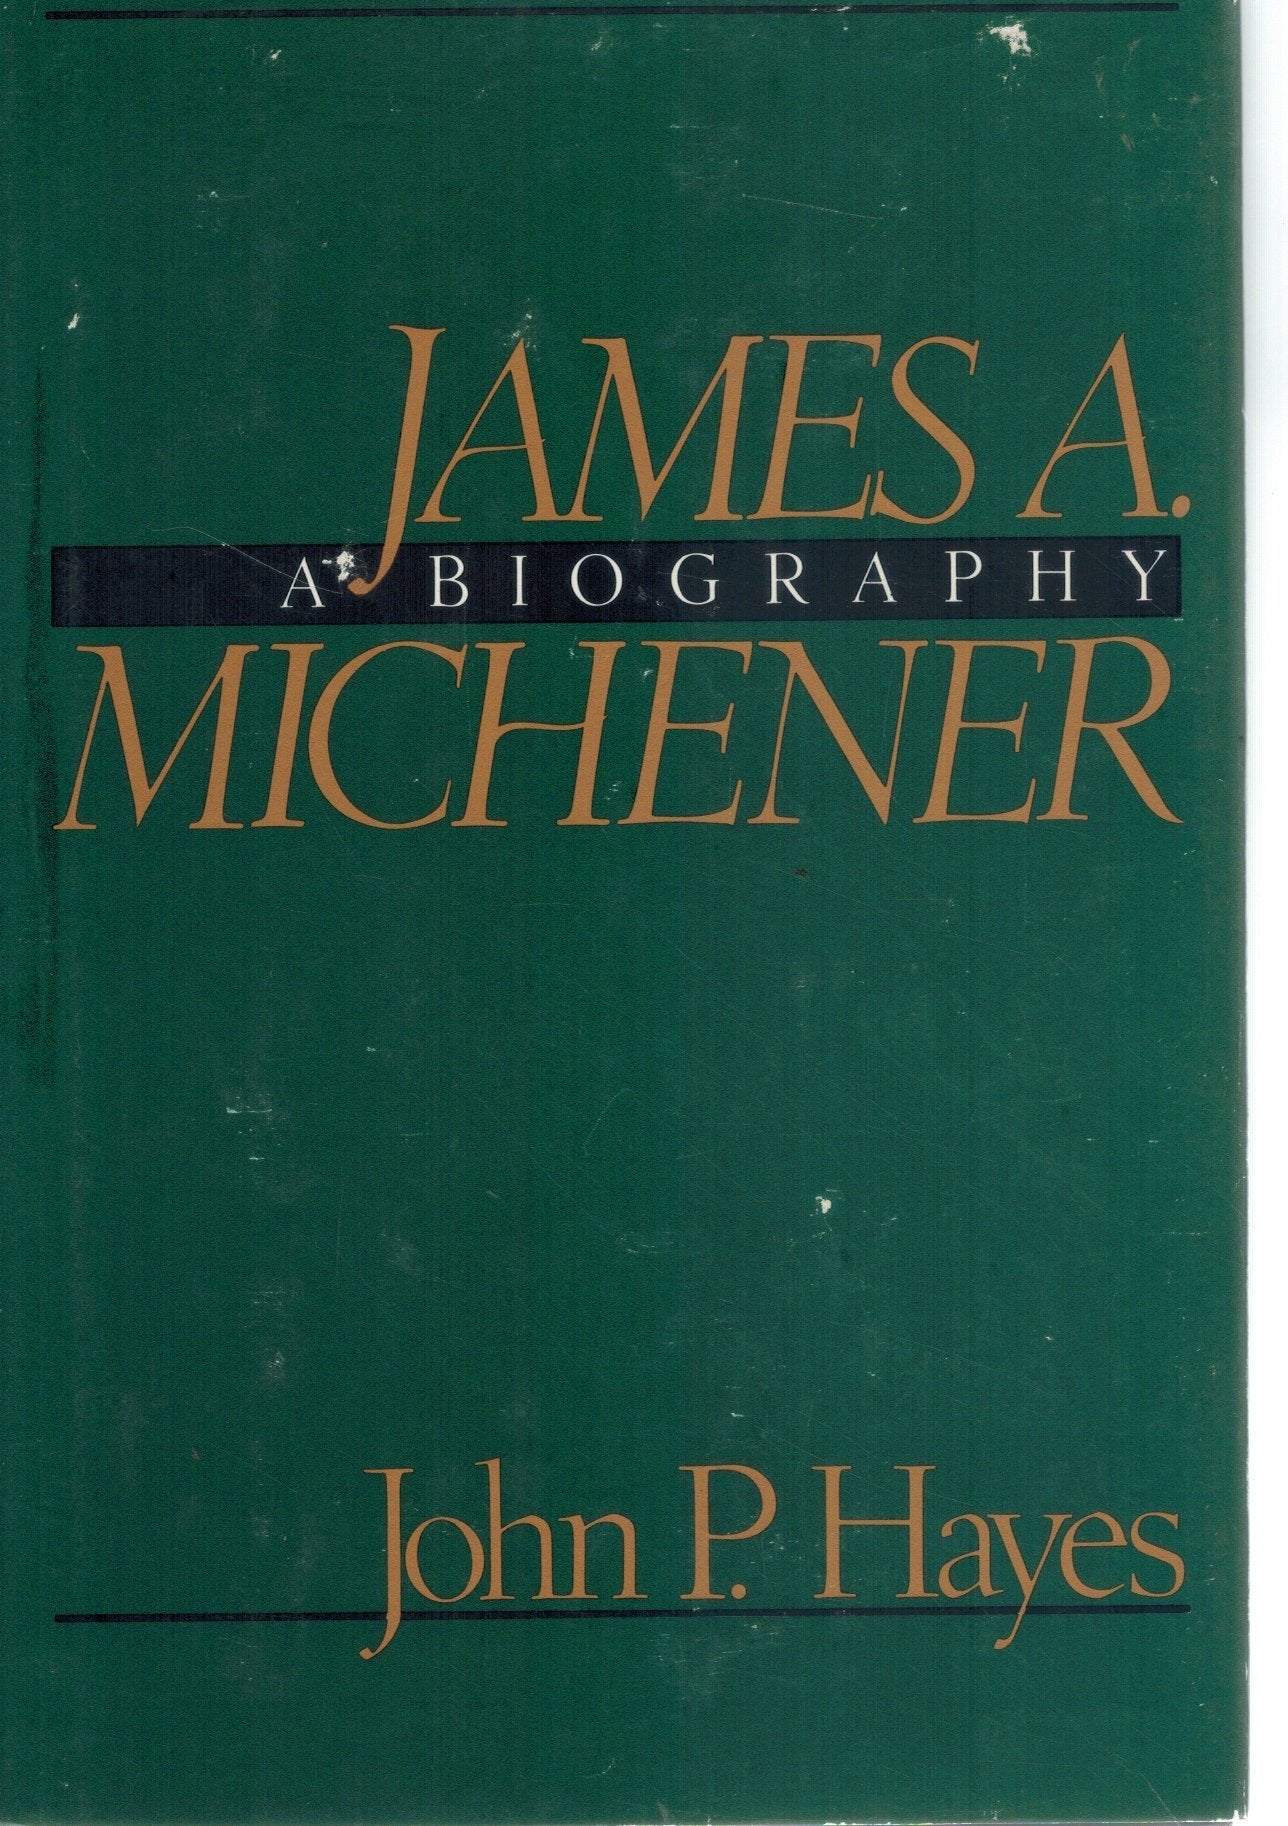 James A. Michener  A Biography